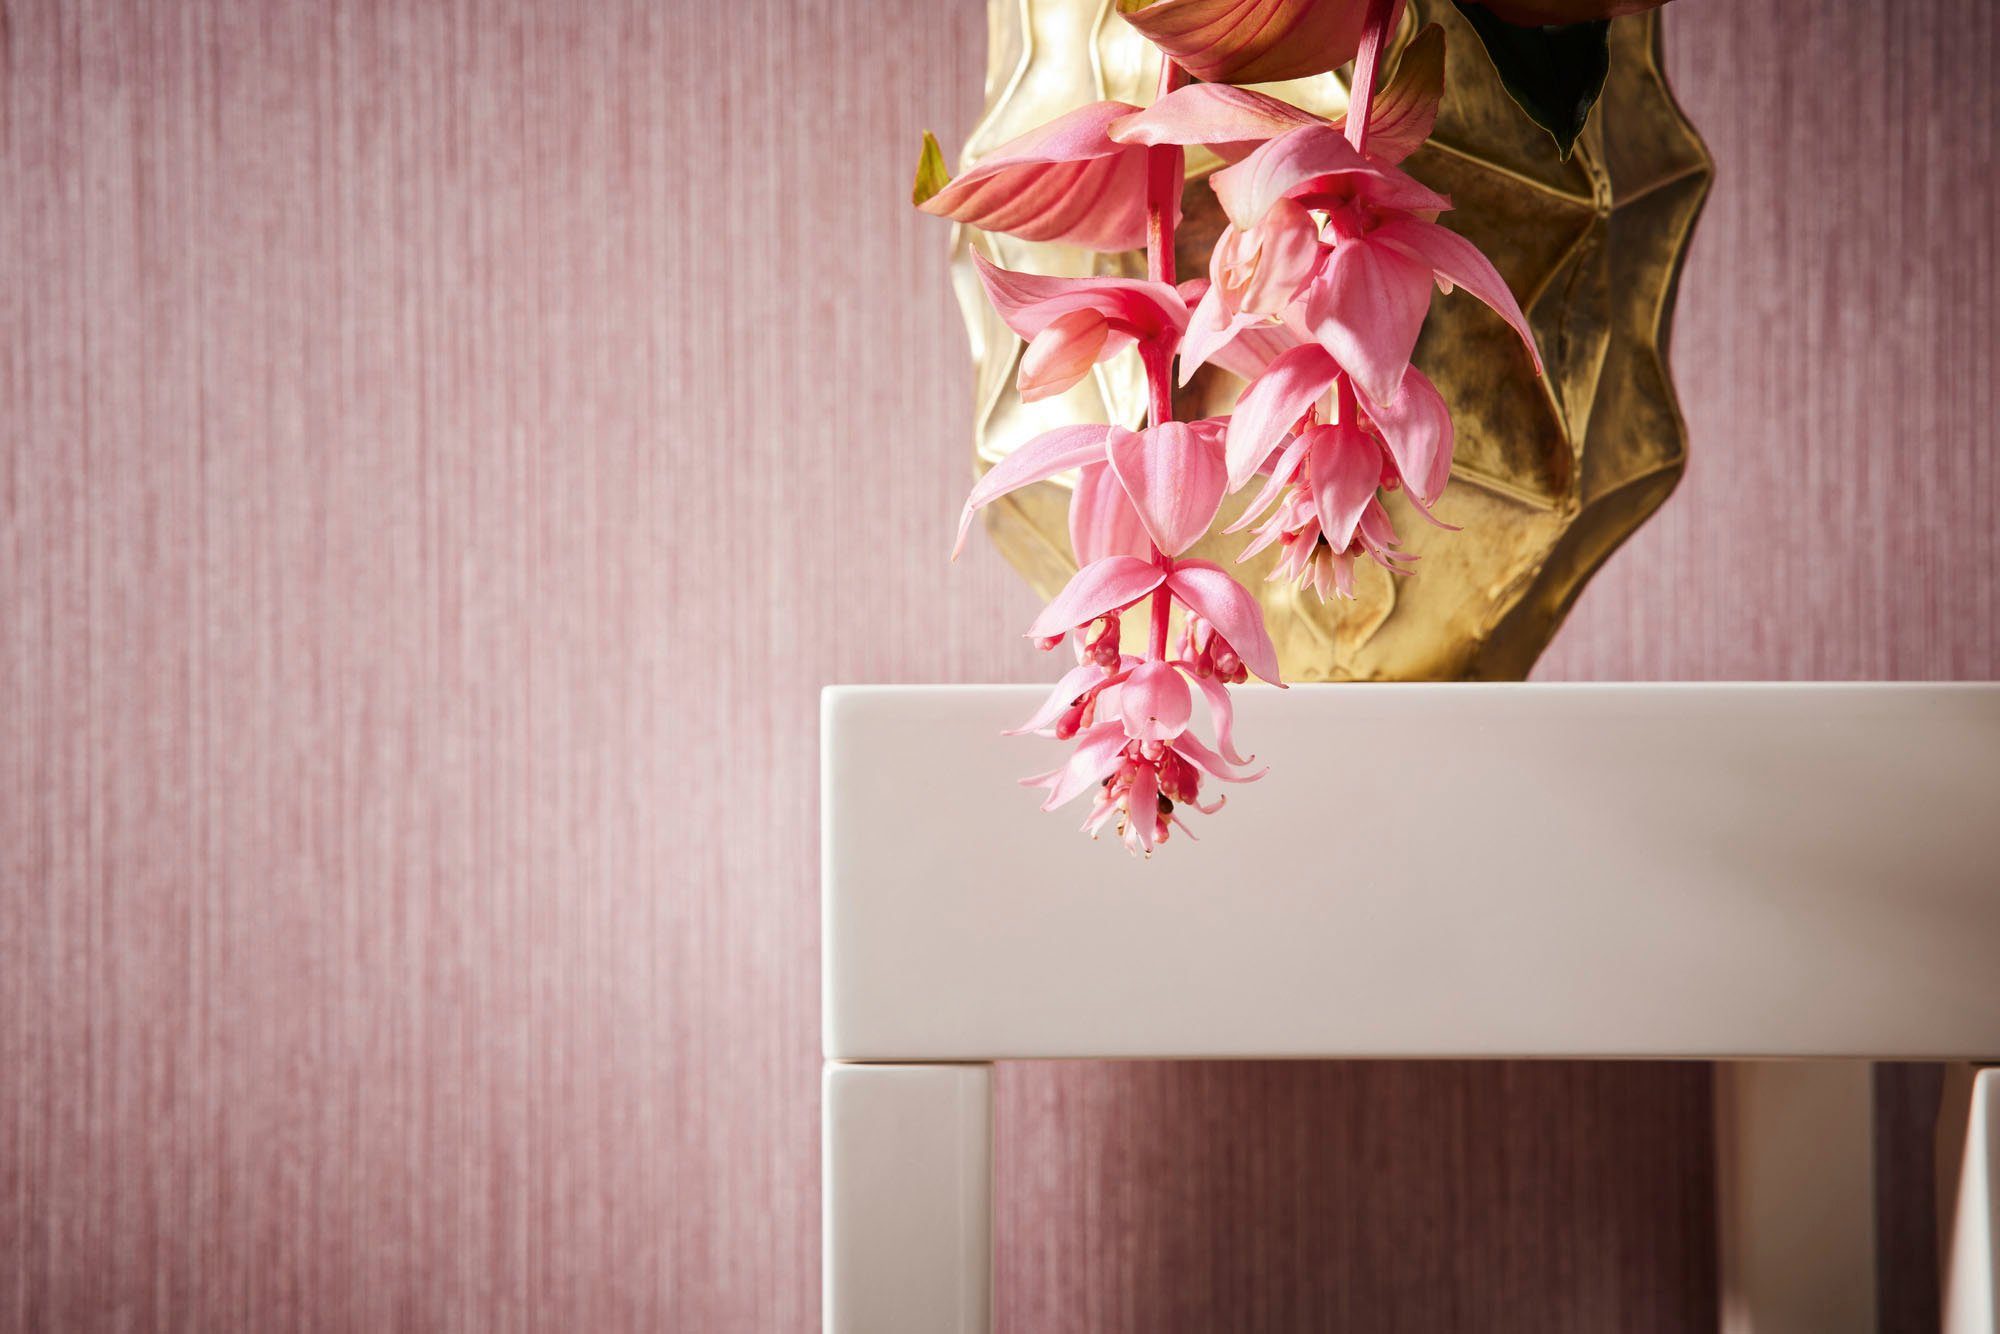 Architects Paper Vliestapete VILLA, glatt, unifarben, rosa Tapete Glitzermuster, glänzend, Uni Einfarbige